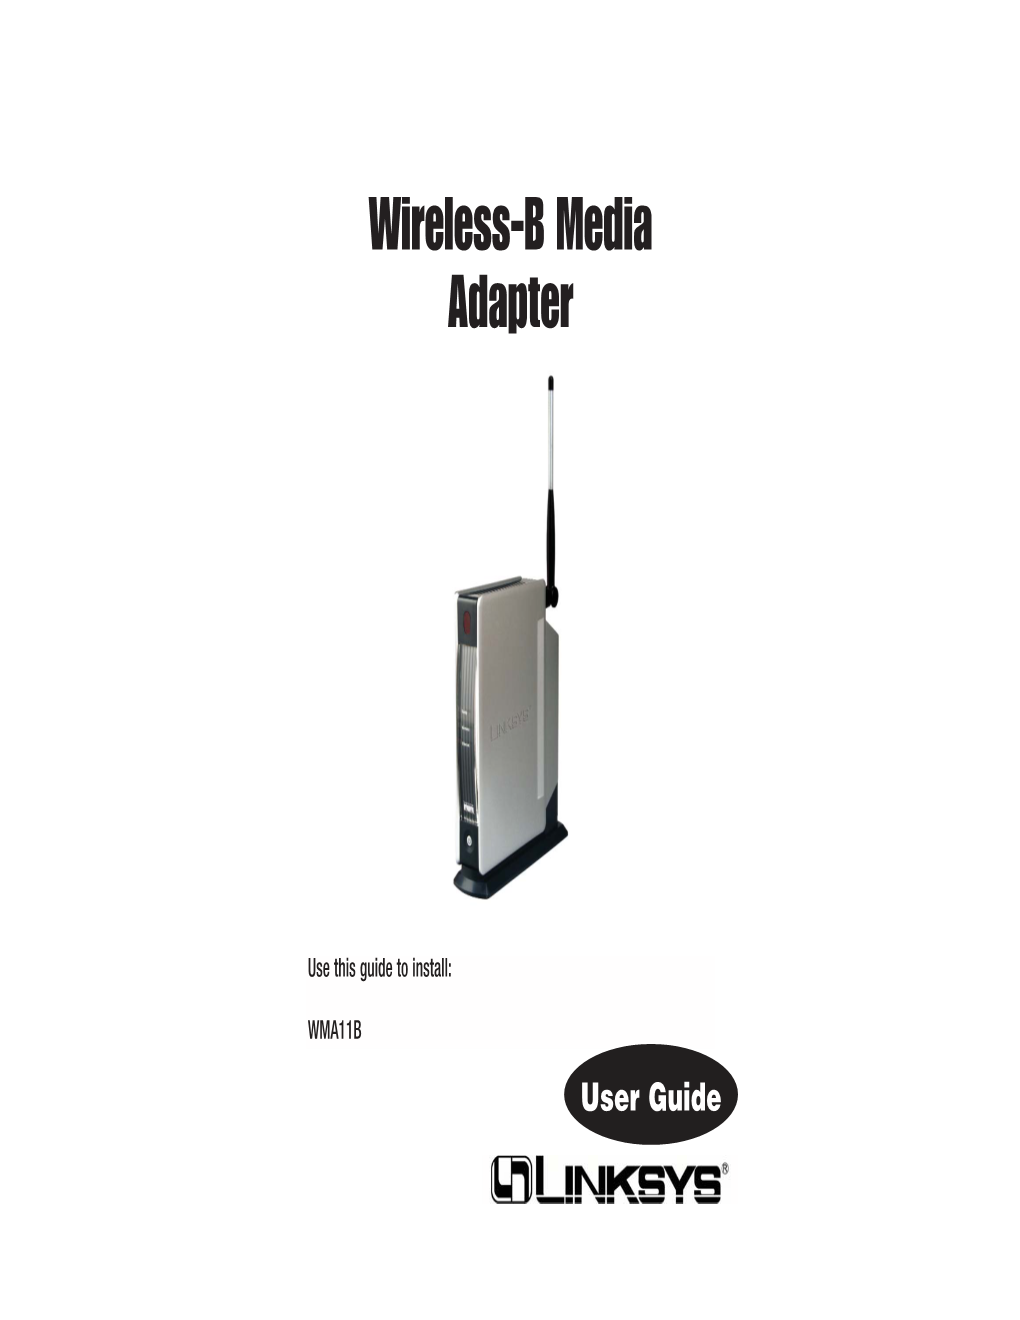 Wireless-B Media Adapter